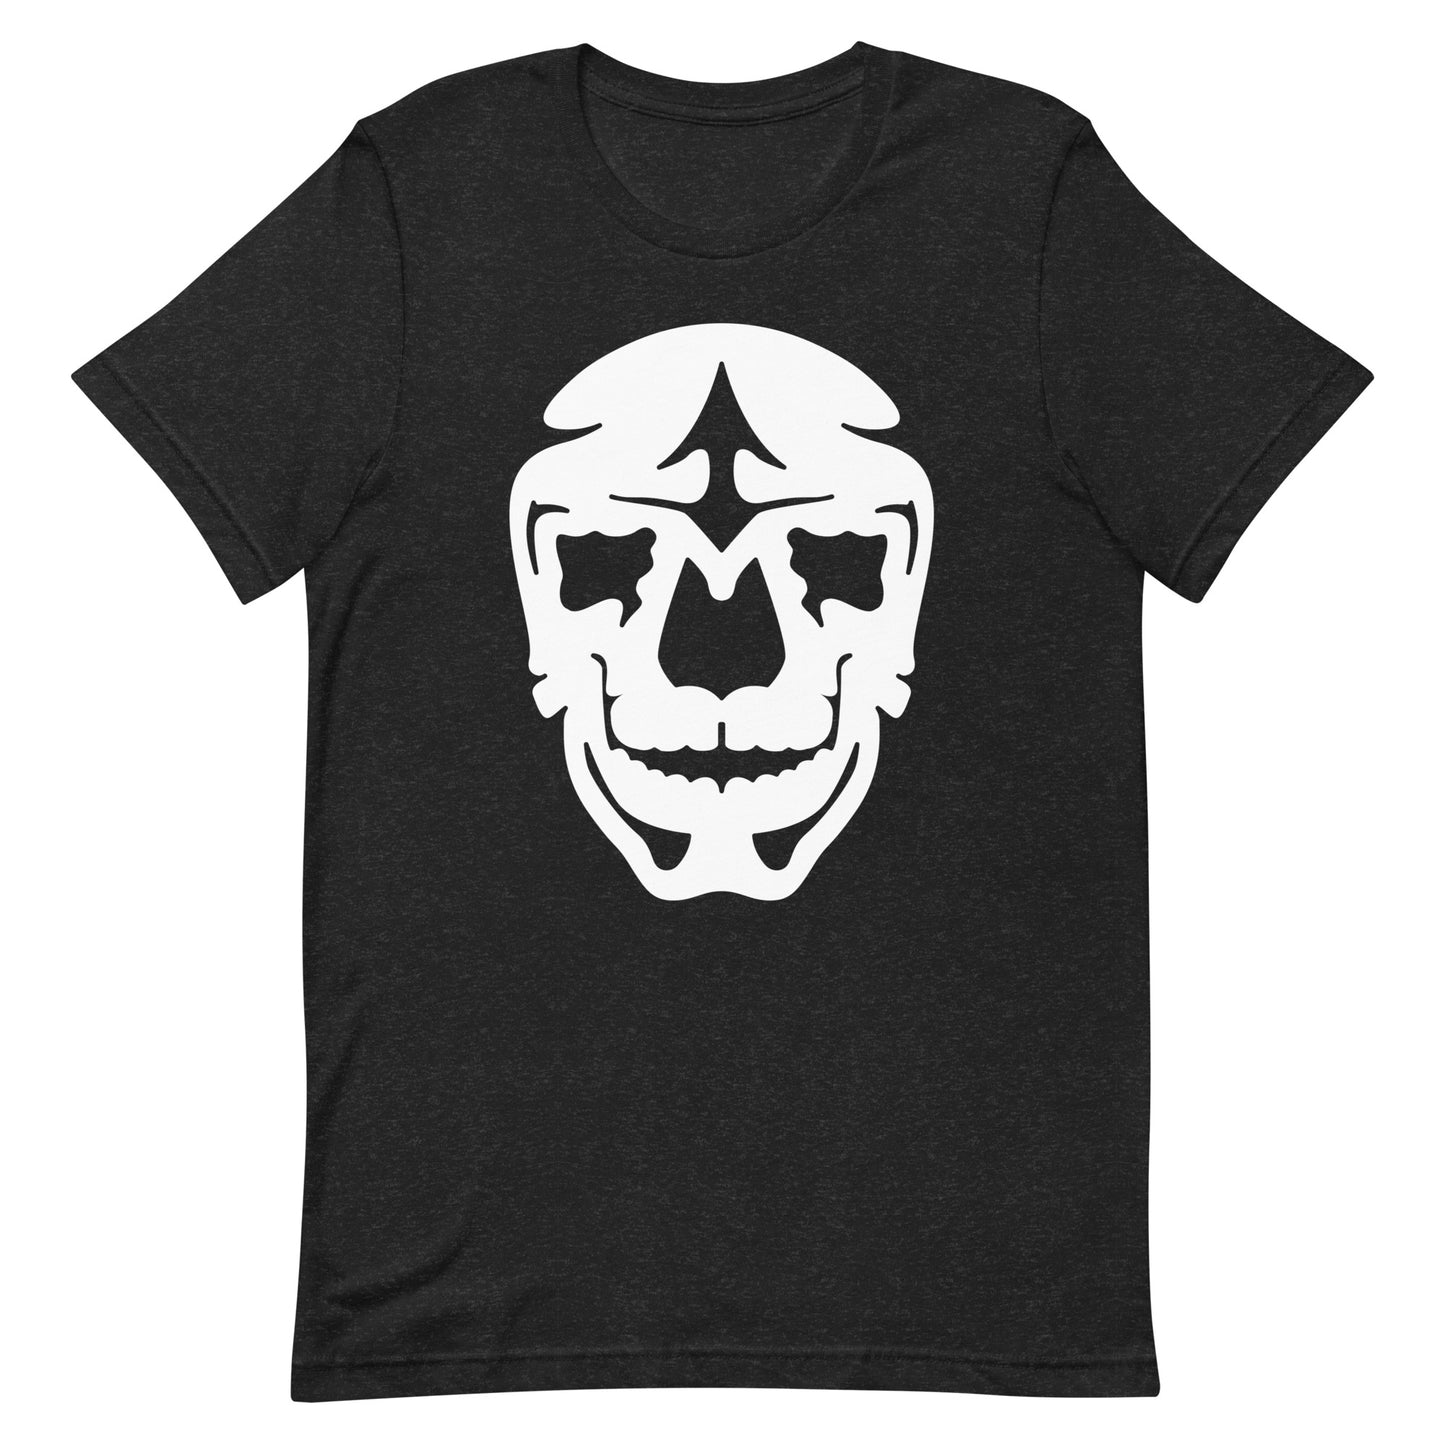 La Parka Mexican Wrestler Mask Lucha Libre Unisex T-Shirt